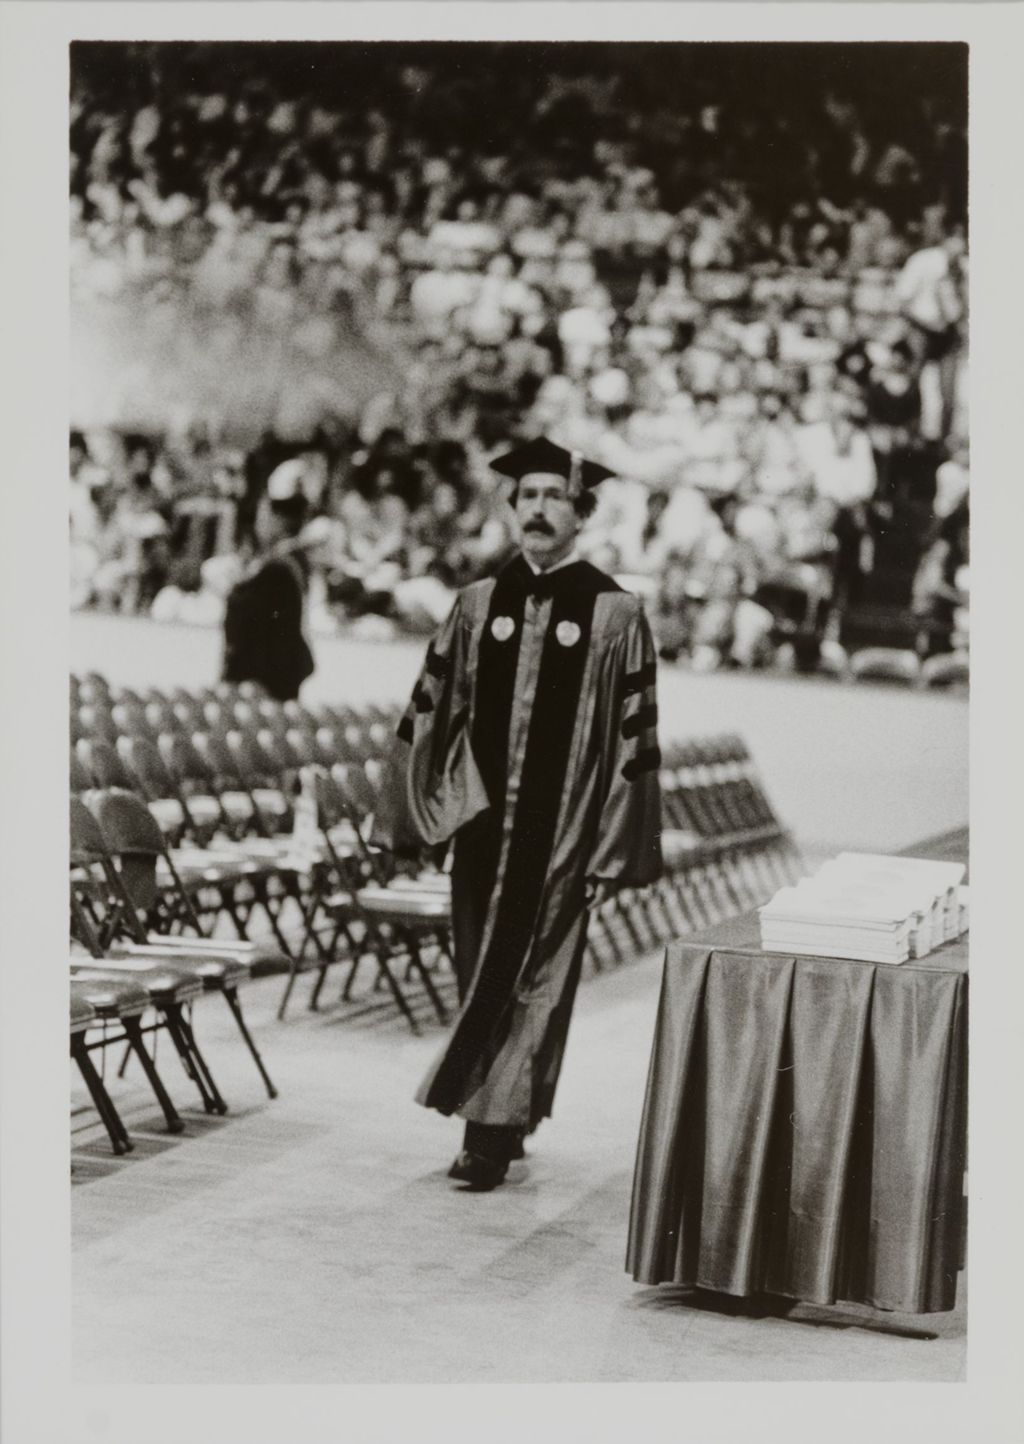 Karl F. Otto, Jr. at the graduation ceremony